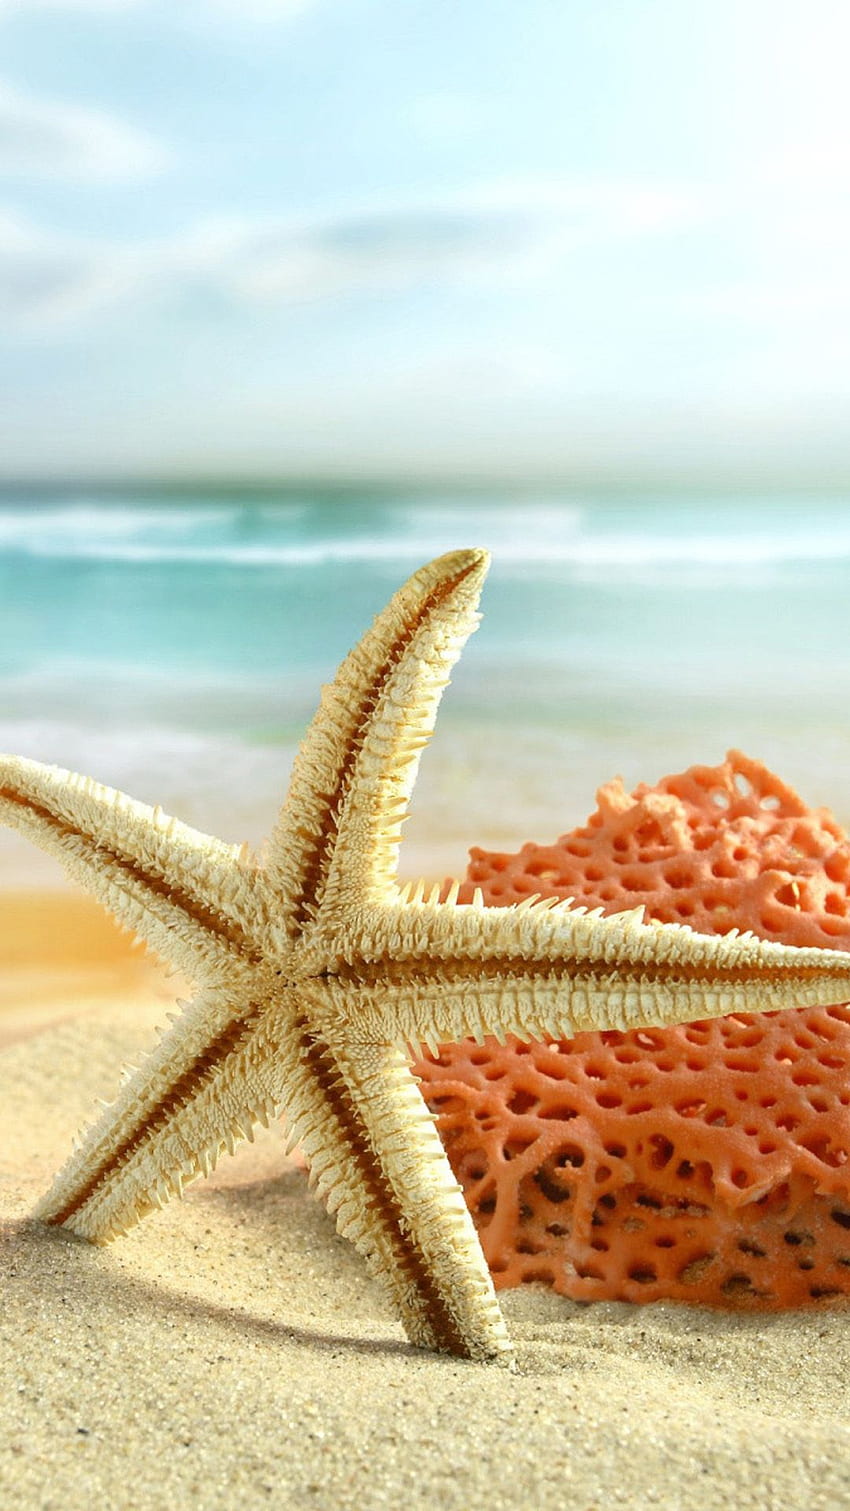 Estrellas de mar juguetes de playa Android - Android, Cute Beach fondo de pantalla del teléfono